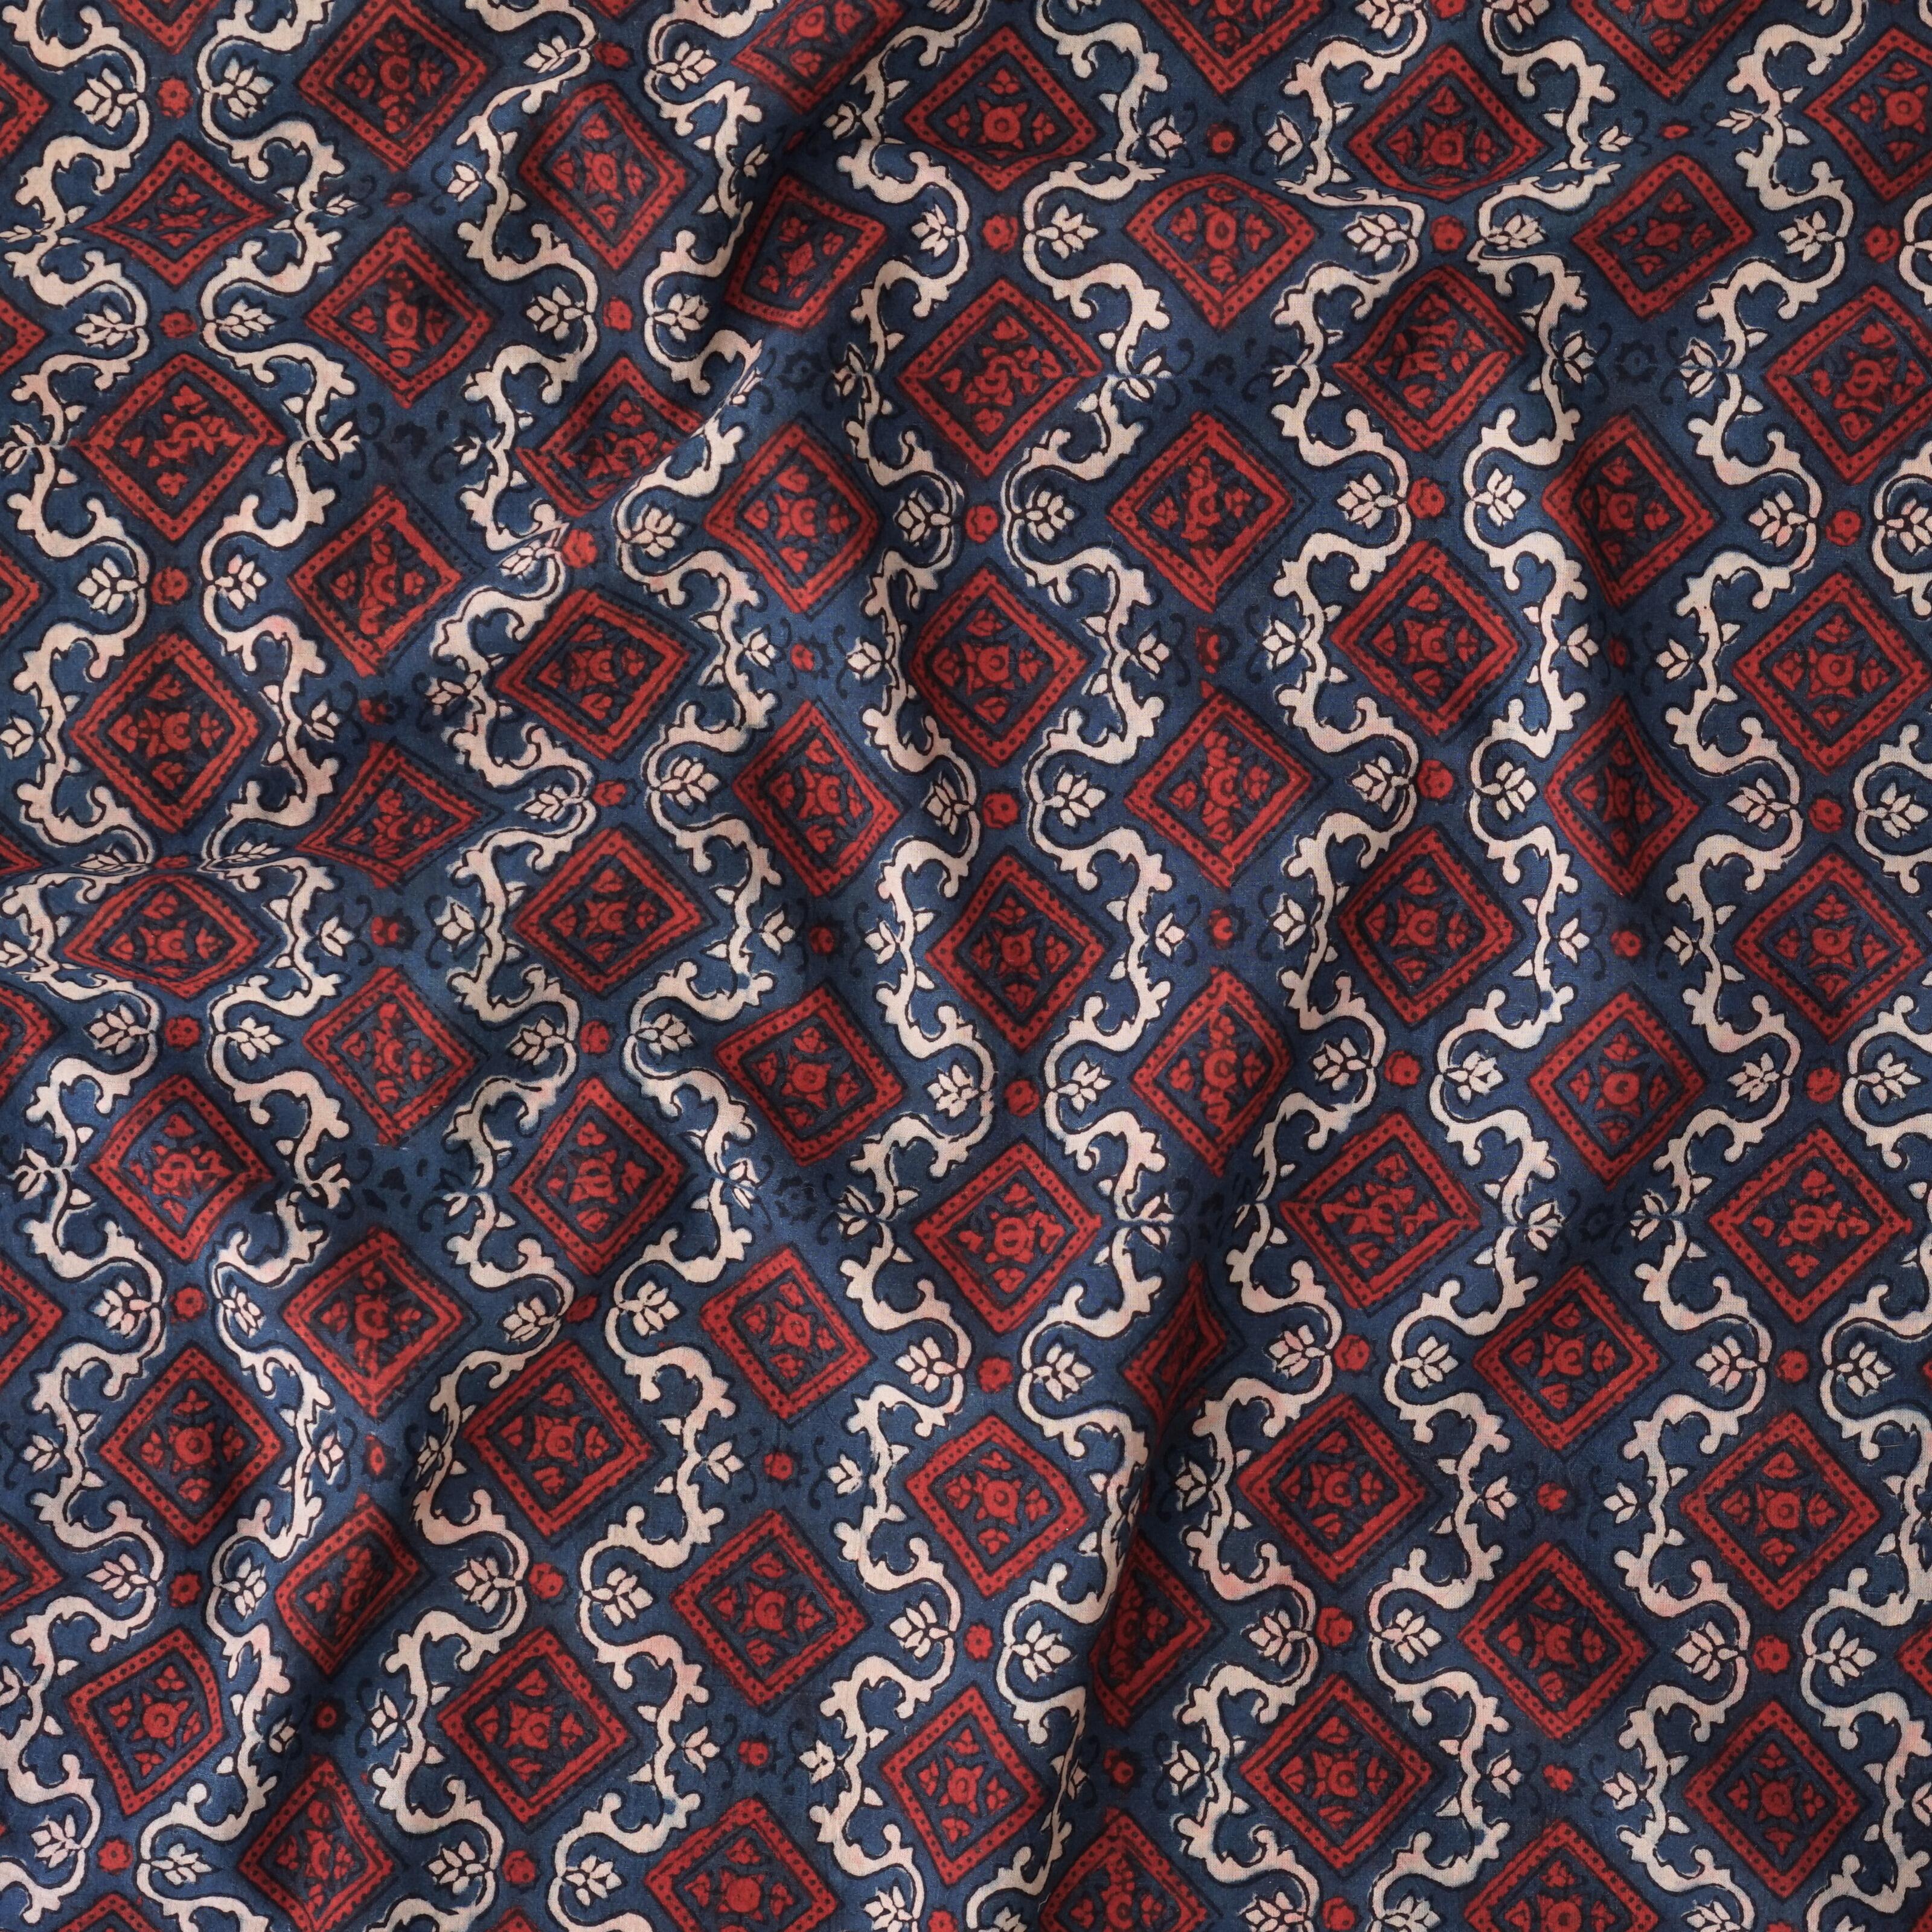 Block Printed Fabric, 100% Cotton, Ajrak Design: Blue Base, White Vine, Red Square. Contrast